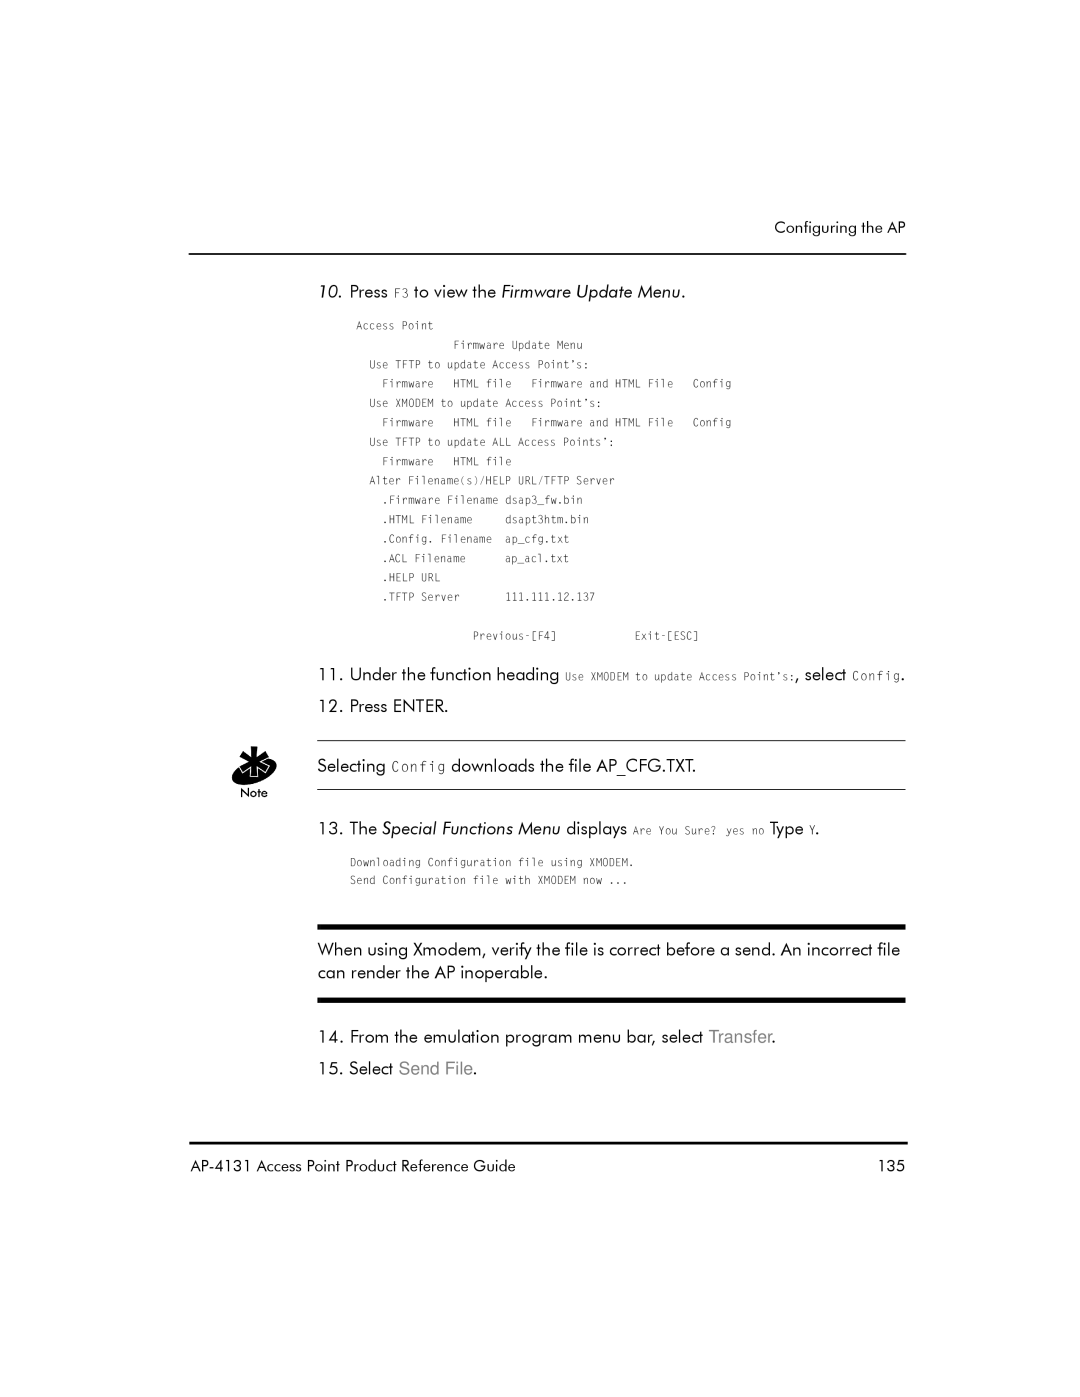 Symbol Technologies AP-4131 manual Press F3 to view the Firmware Update Menu 